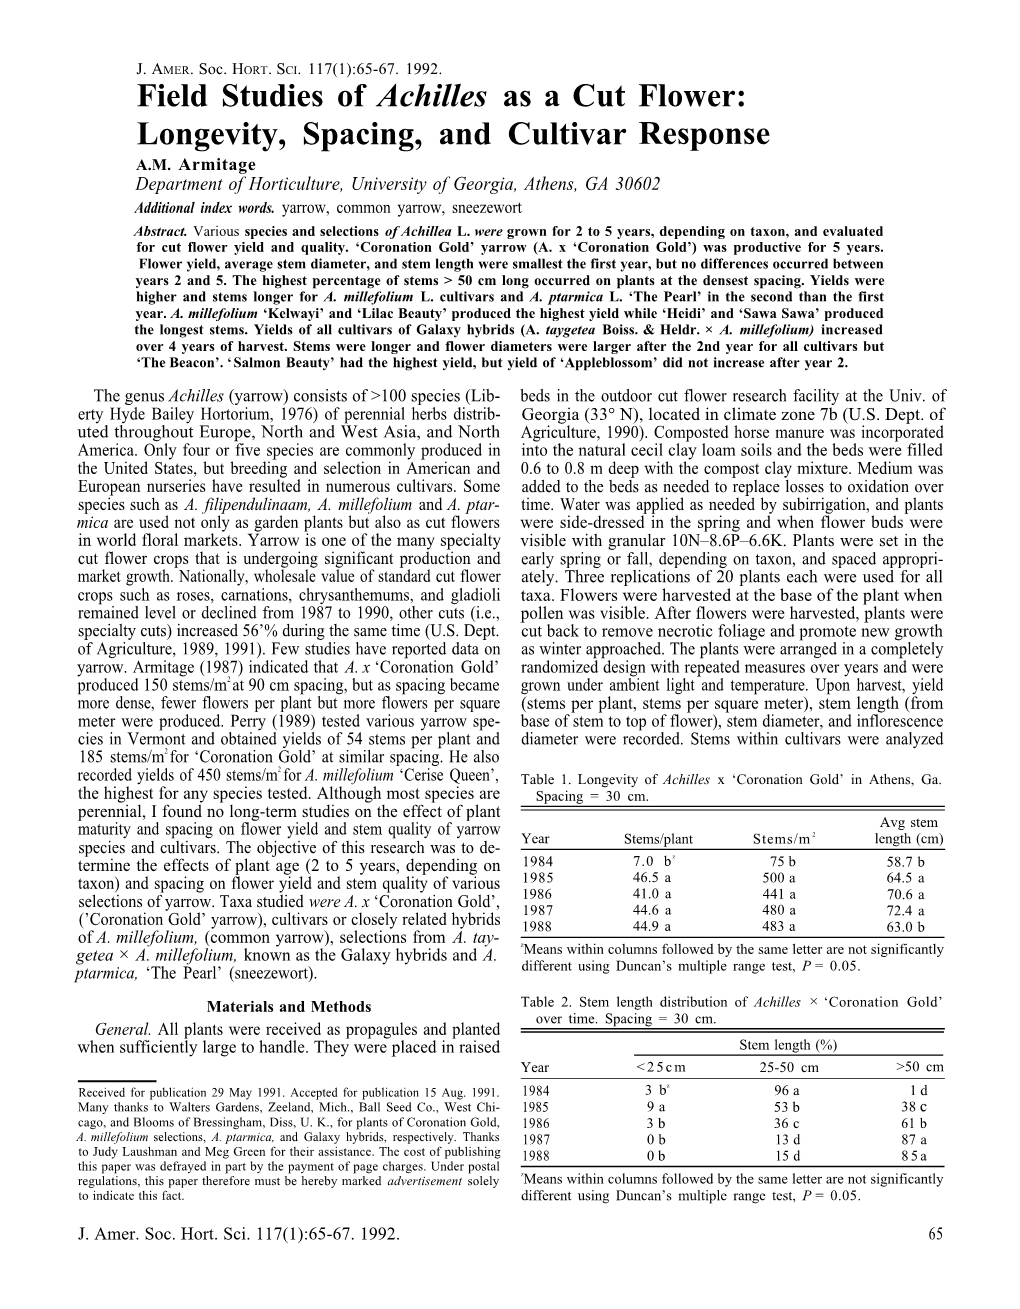 Field Studies of Achilles As a Cut Flower: Longevity, Spacing, and Cultivar Response A.M